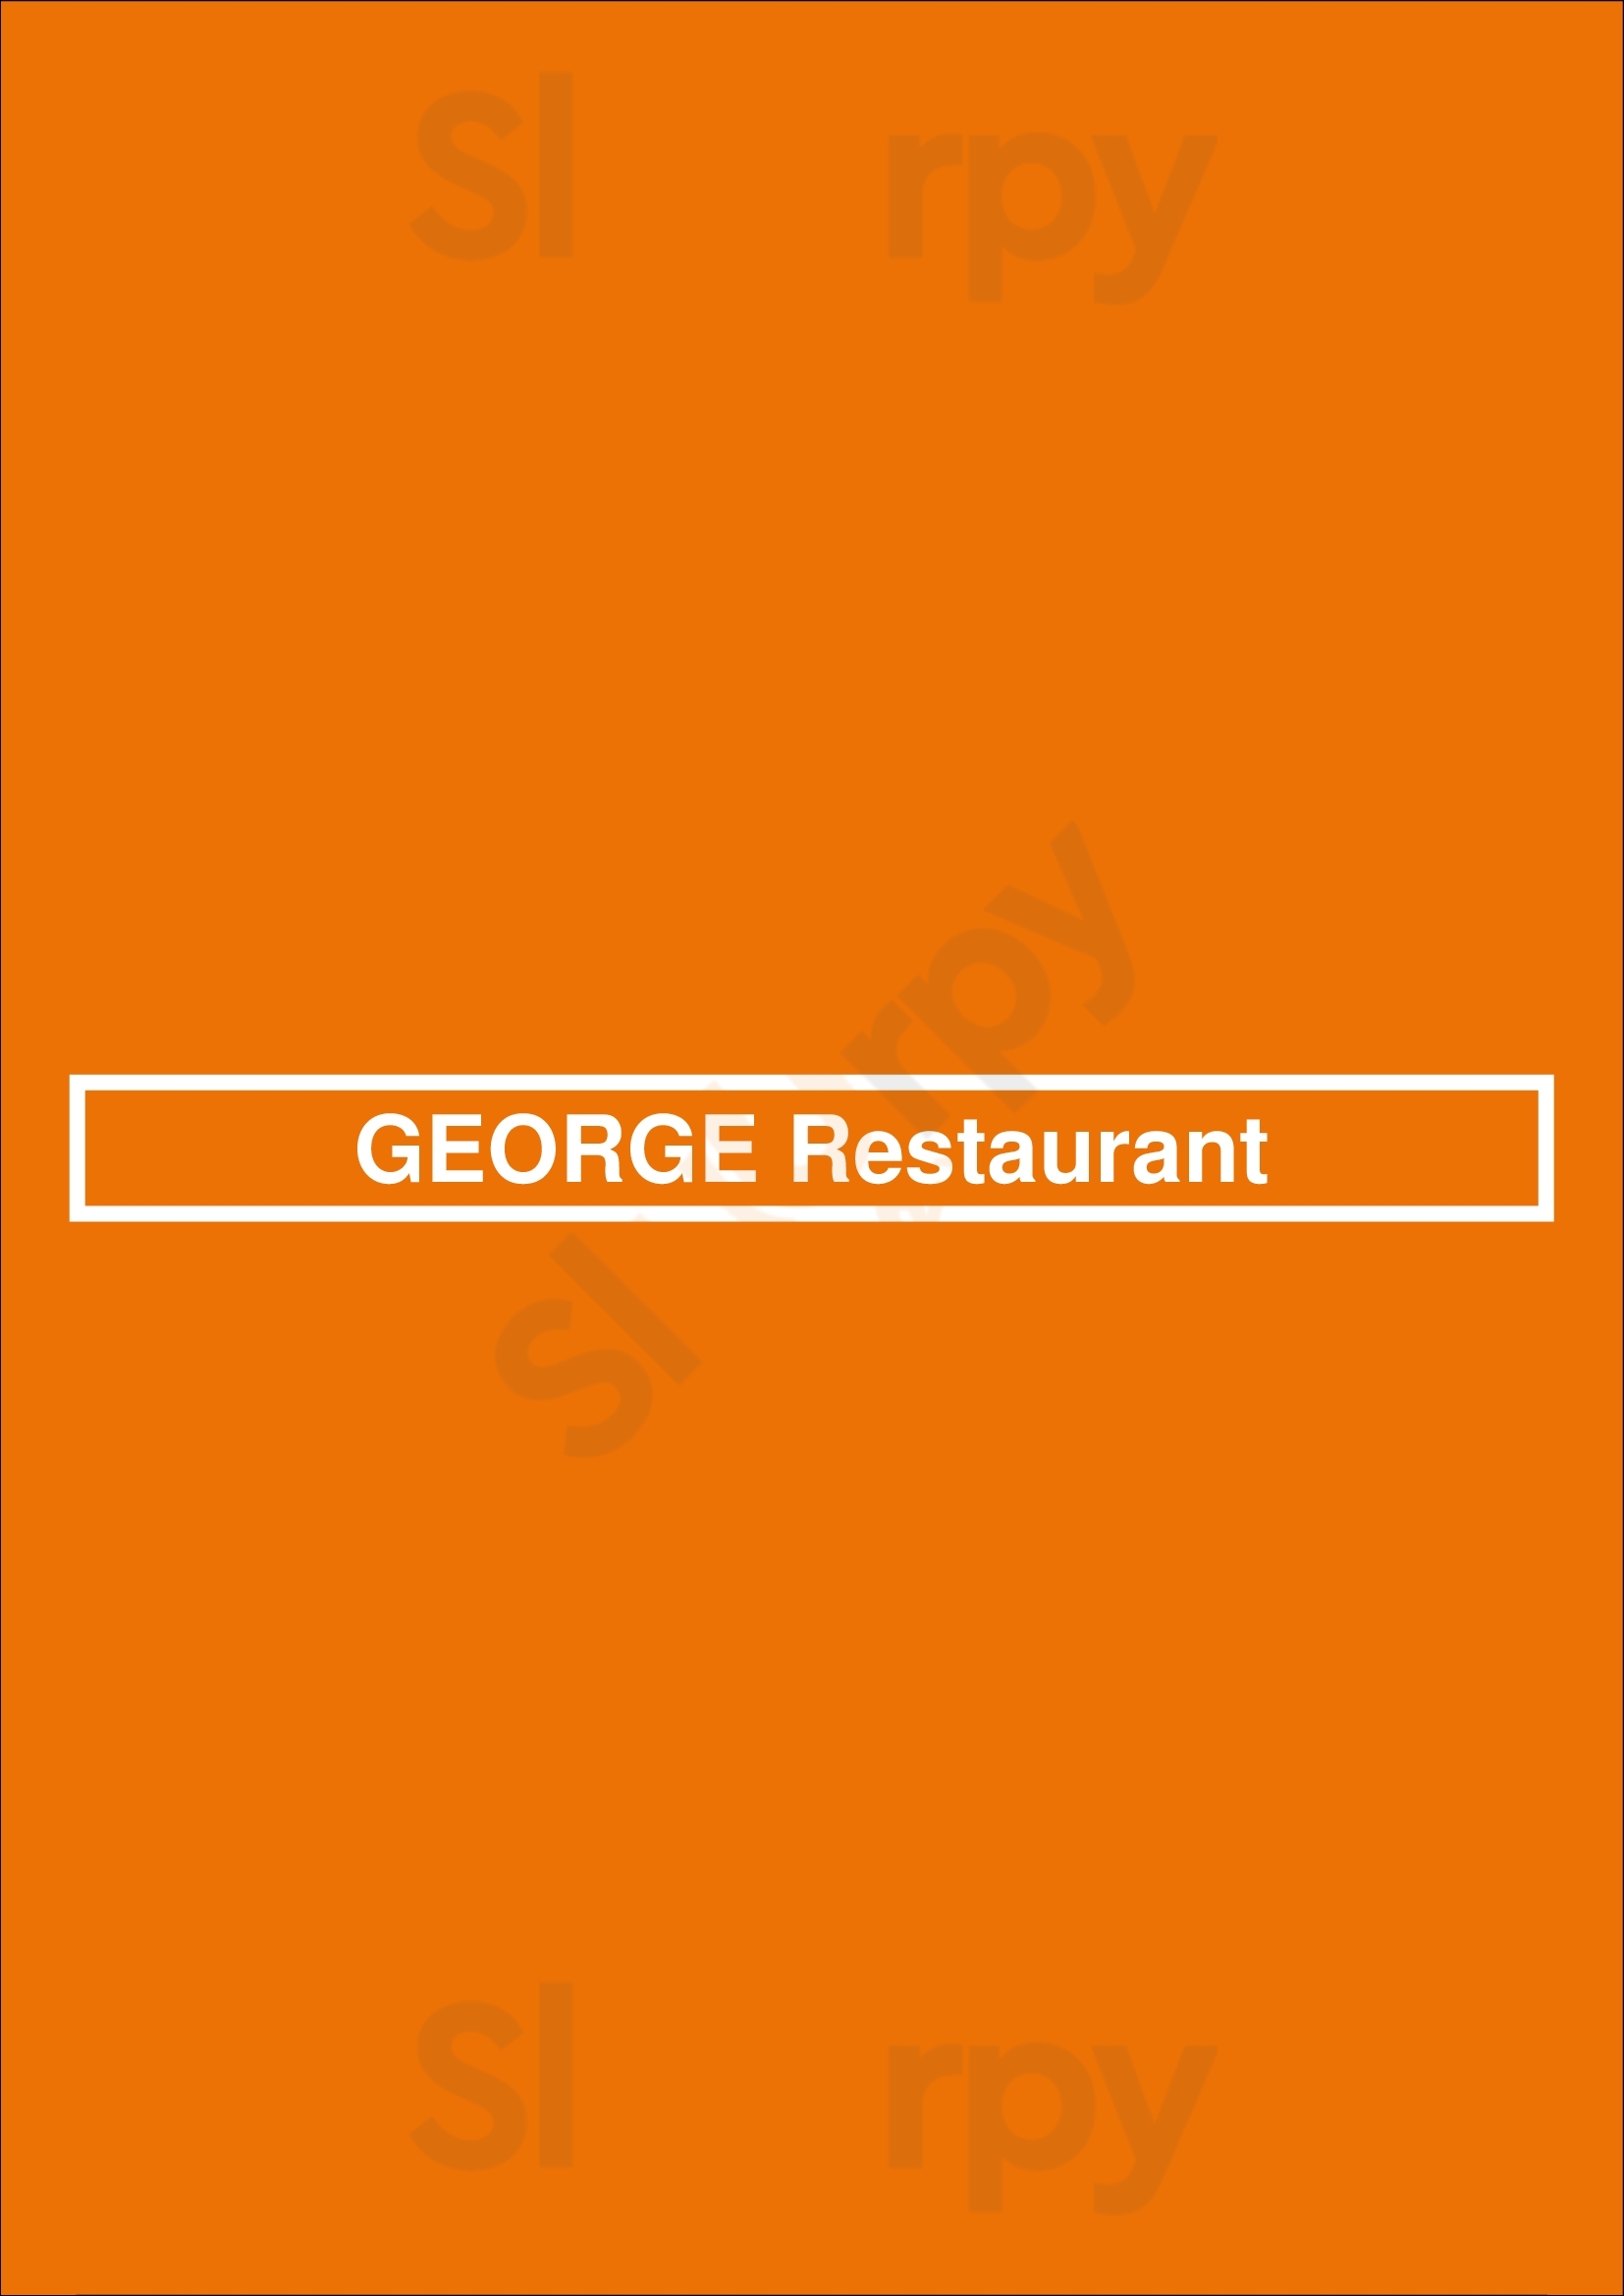 George Restaurant Toronto Menu - 1